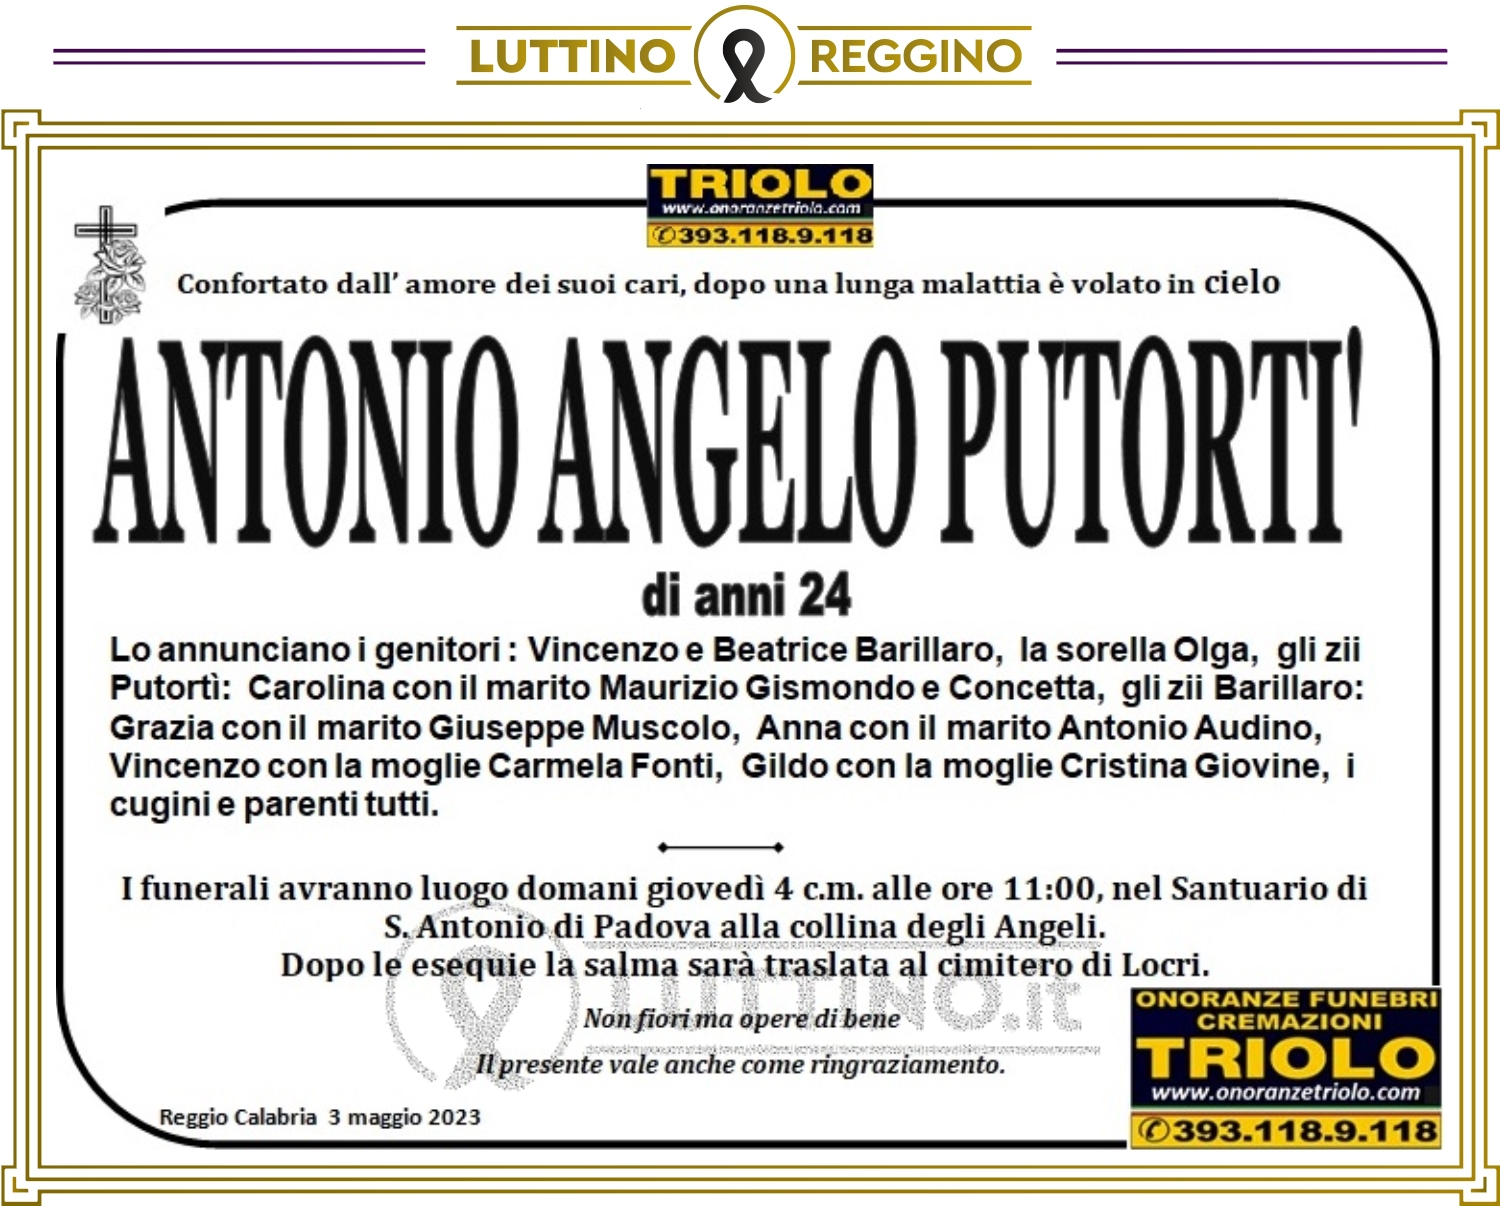 Antonio Angelo Putortí